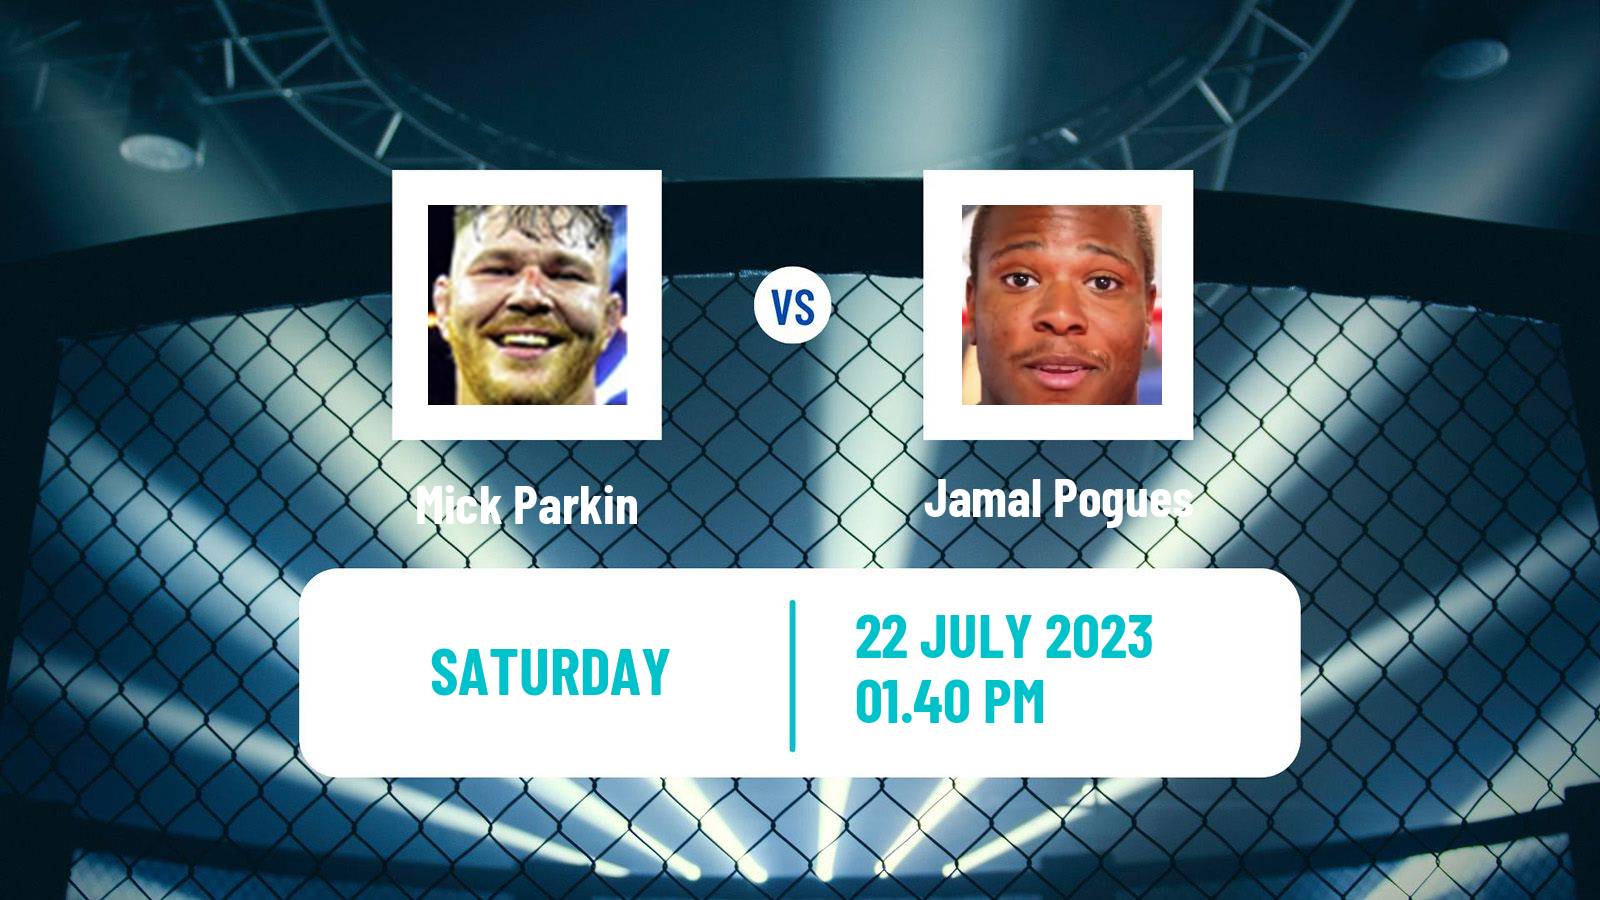 MMA Light Heavyweight UFC Men Mick Parkin - Jamal Pogues